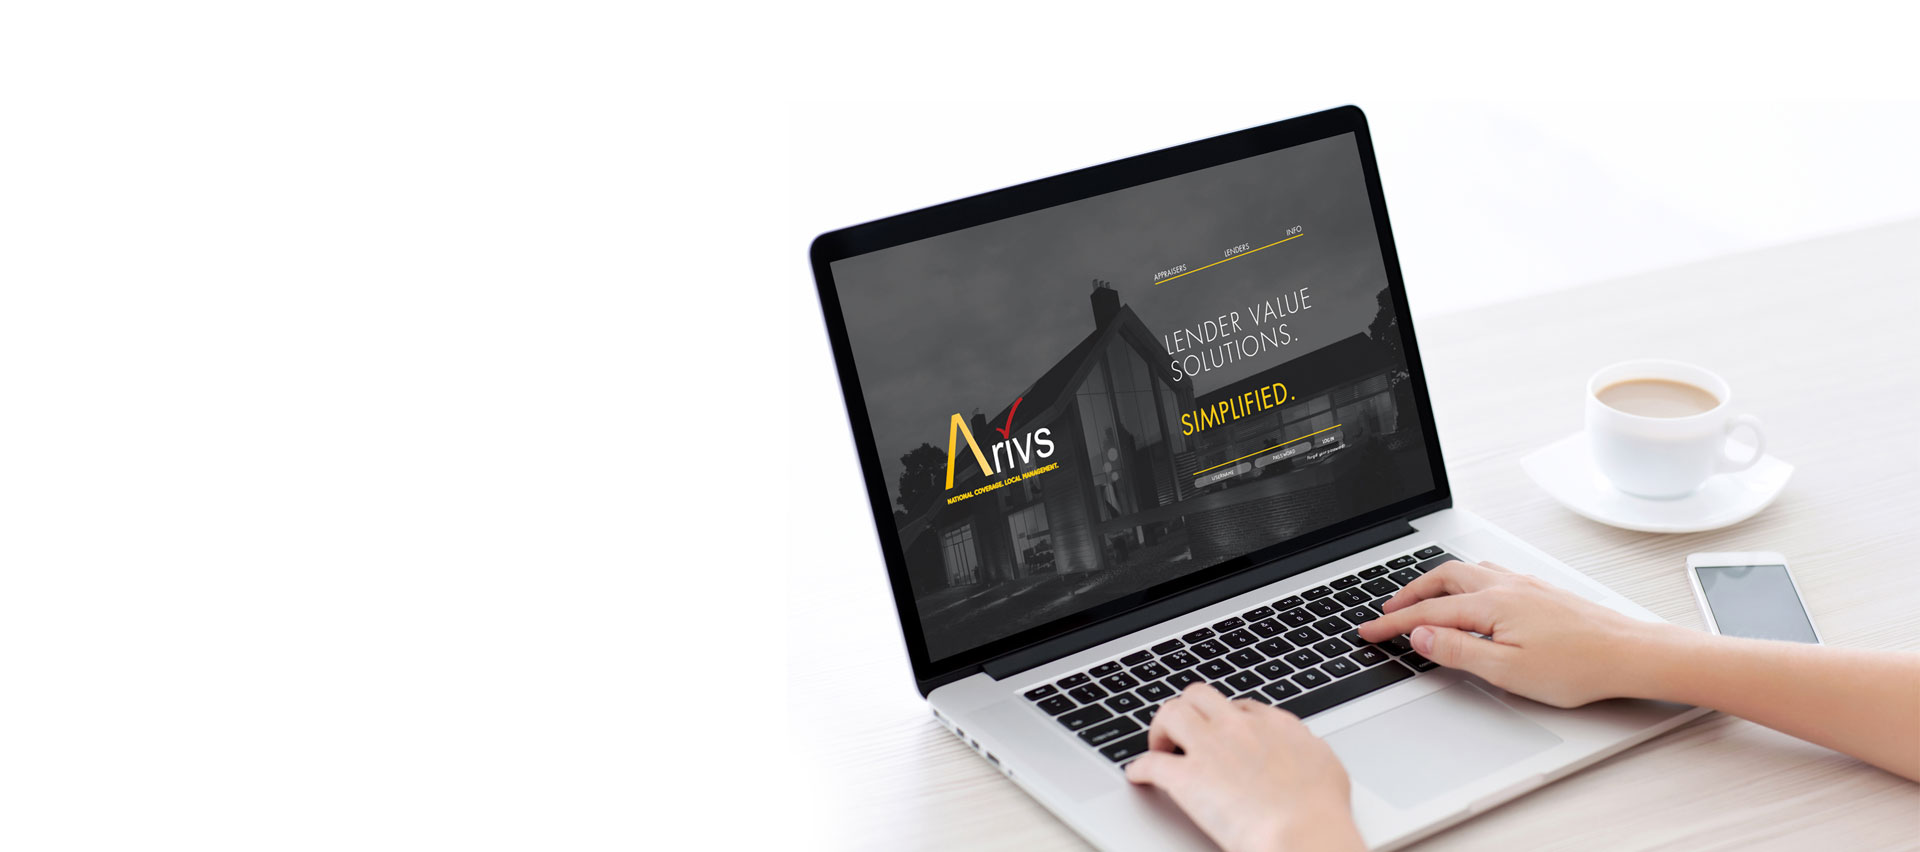 Arivs logo on laptop - appraisal process